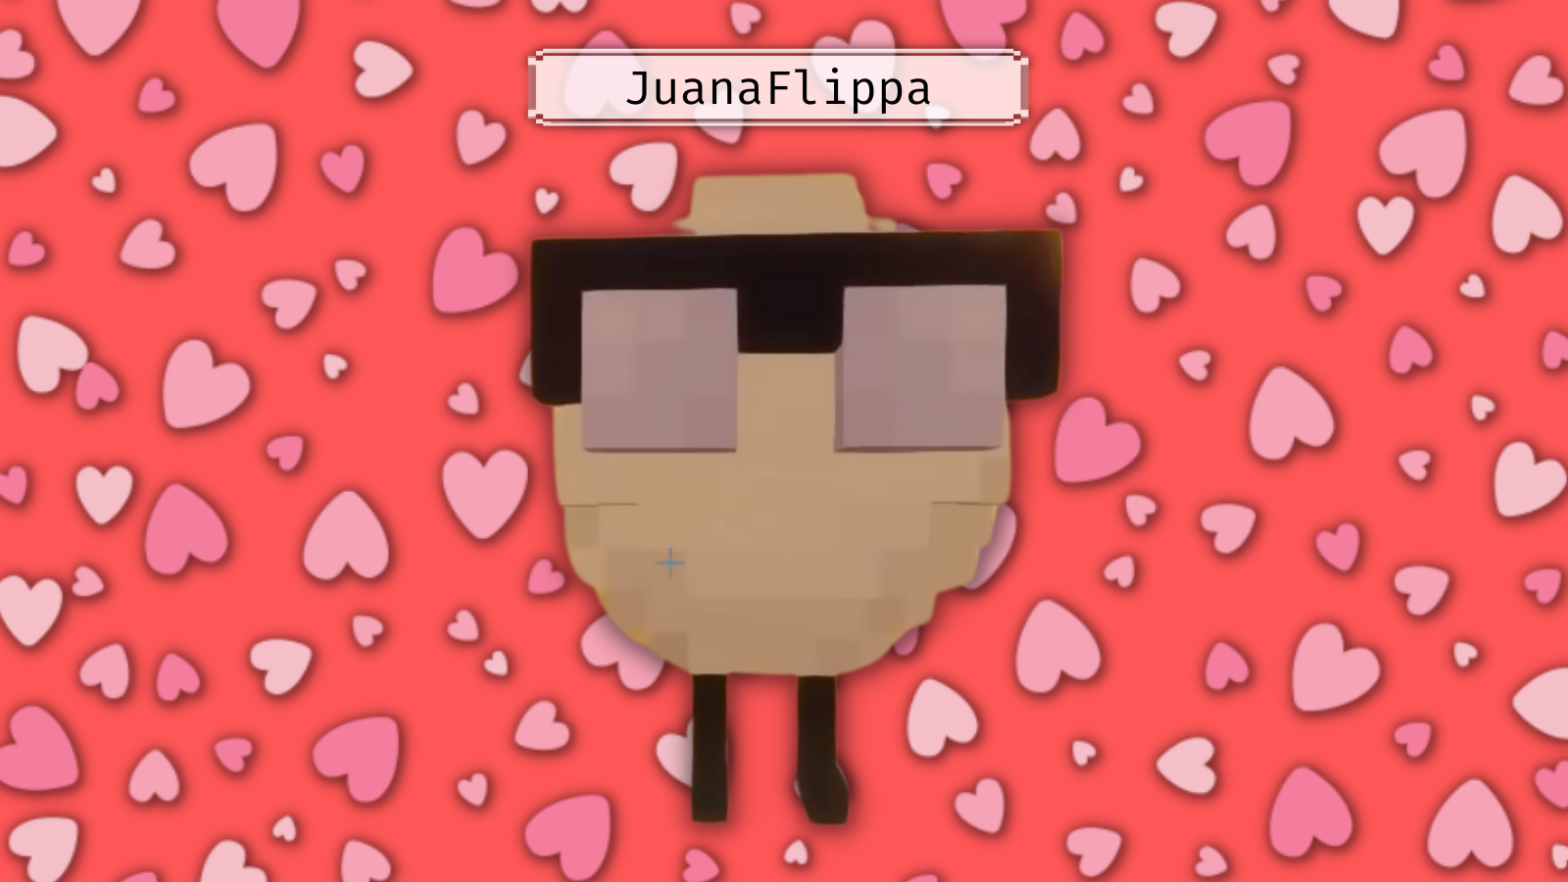 Slime and ElMariana adopted JuanaFlippa because she wore glasses like them. (Illustration: Jody Serrano / Gizmodo / YouTube)